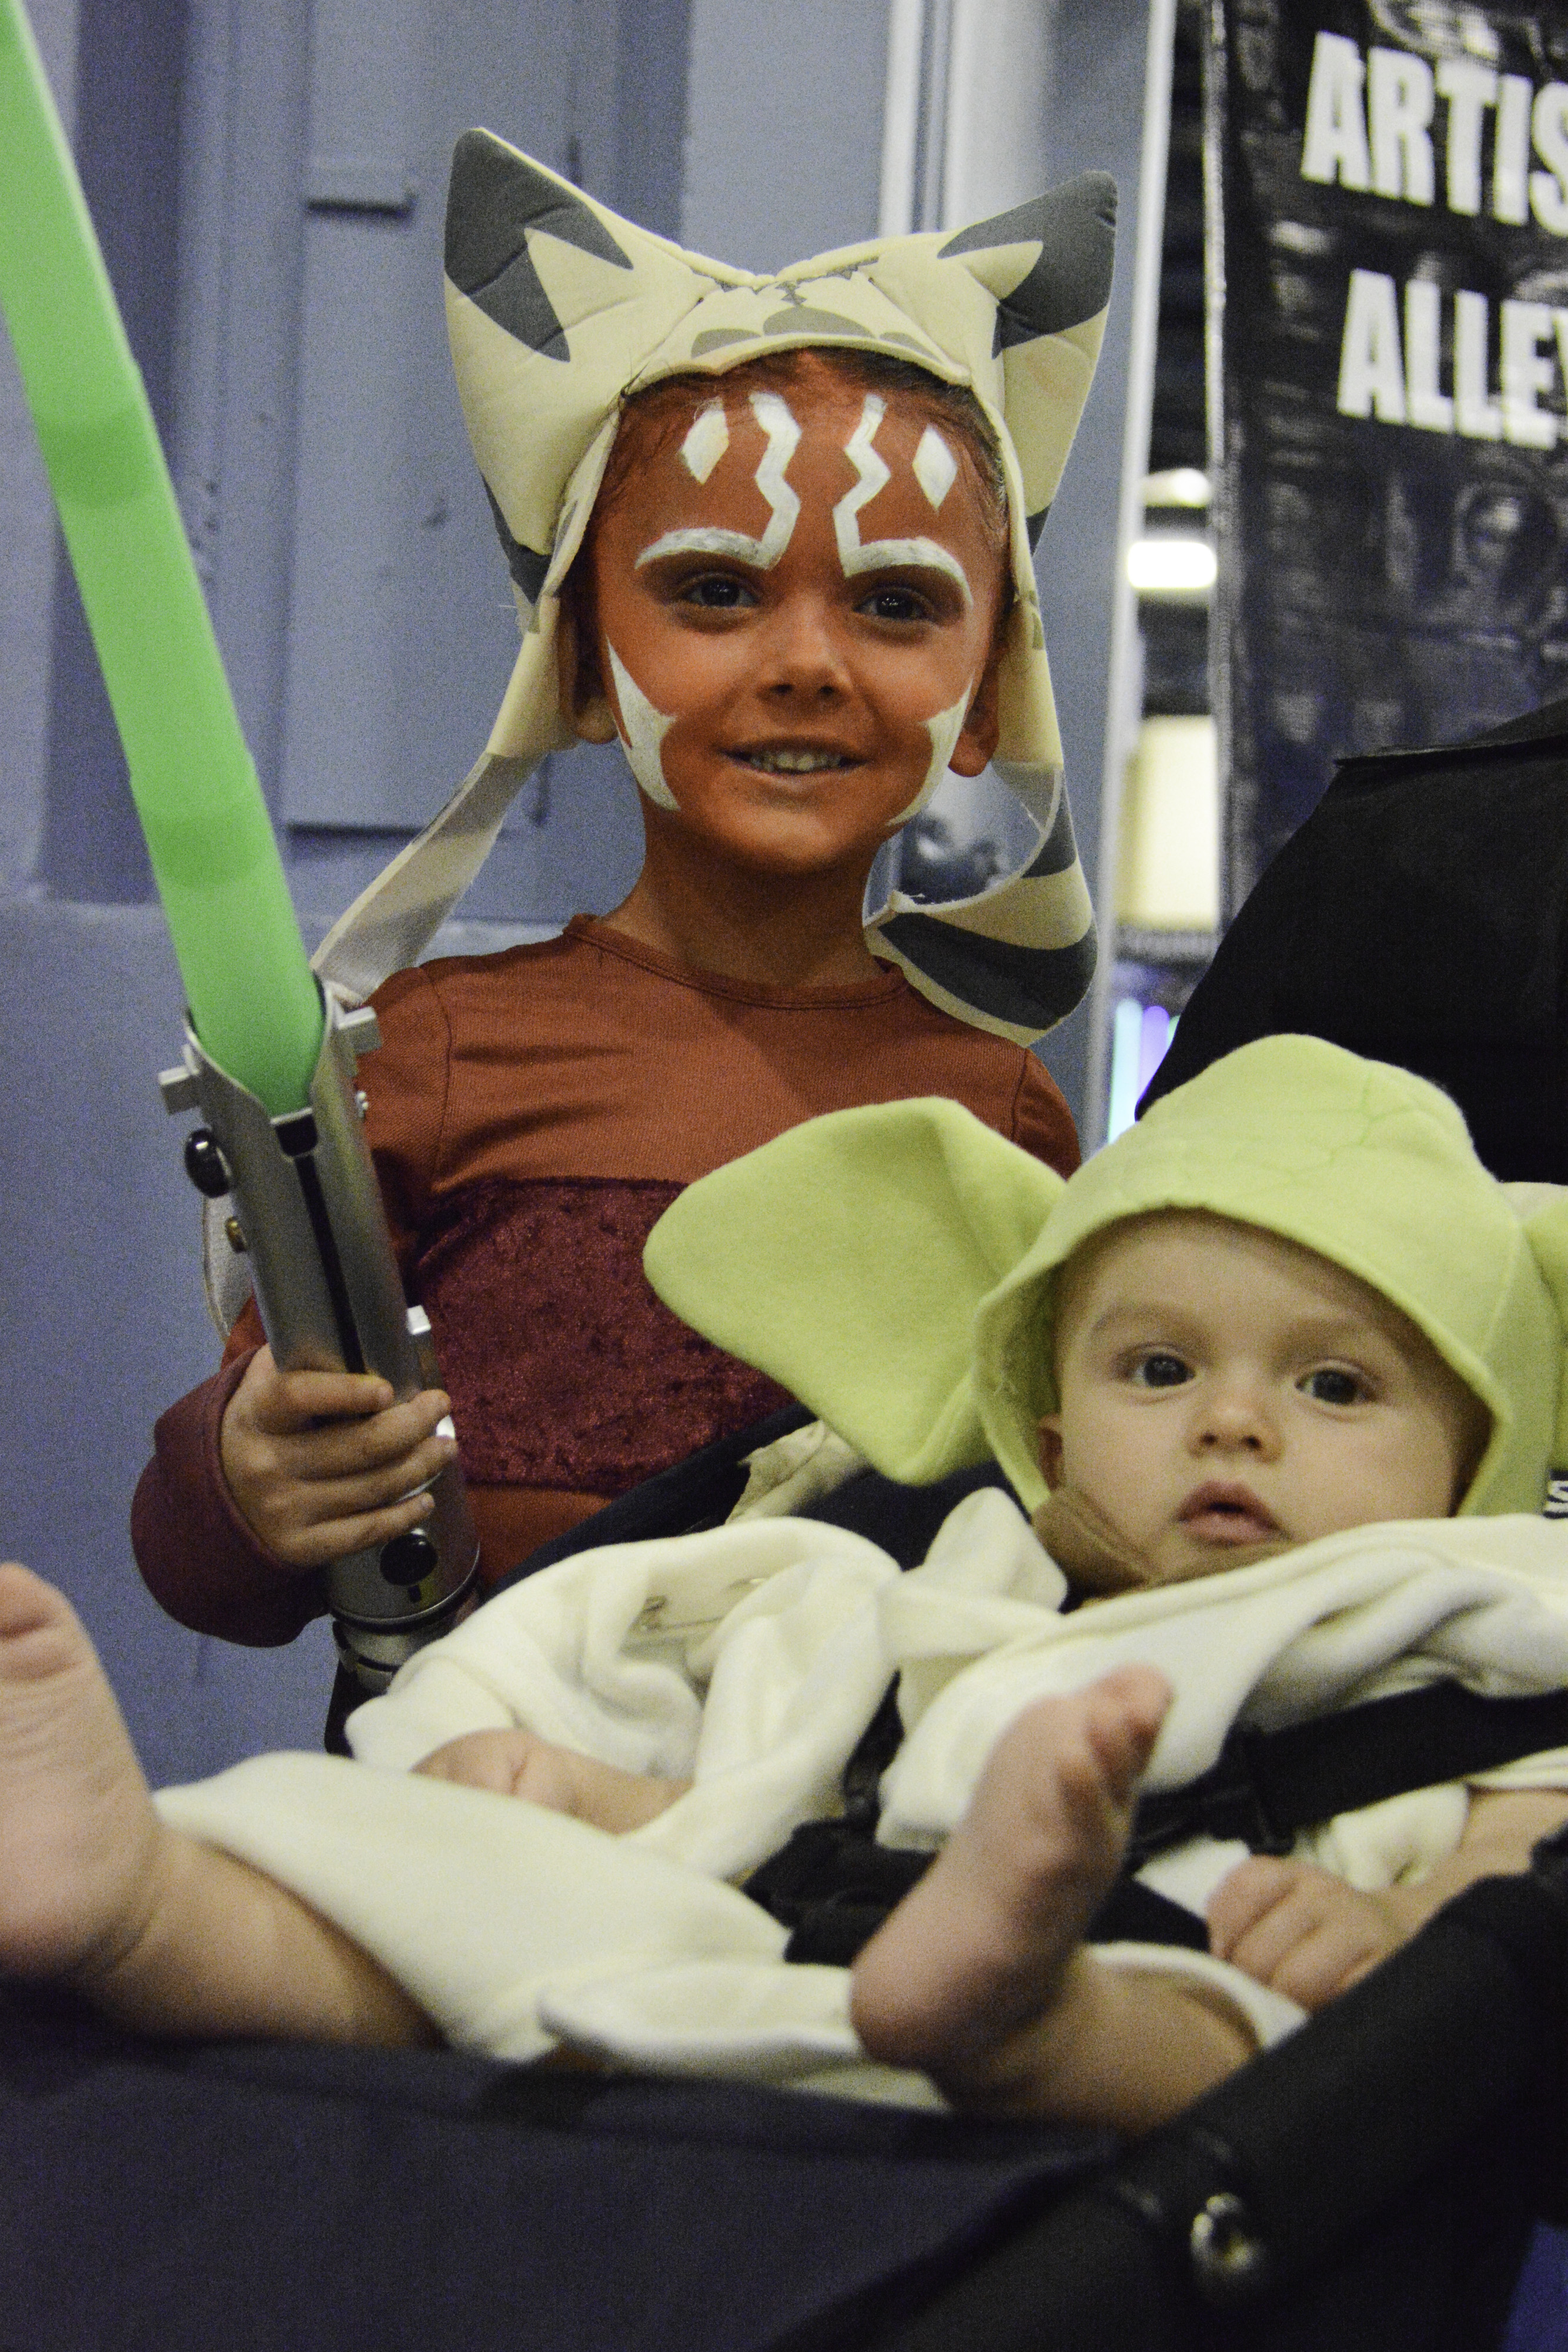 Two children dressed as Ahsoka Tano and Yoda from Start Wars.